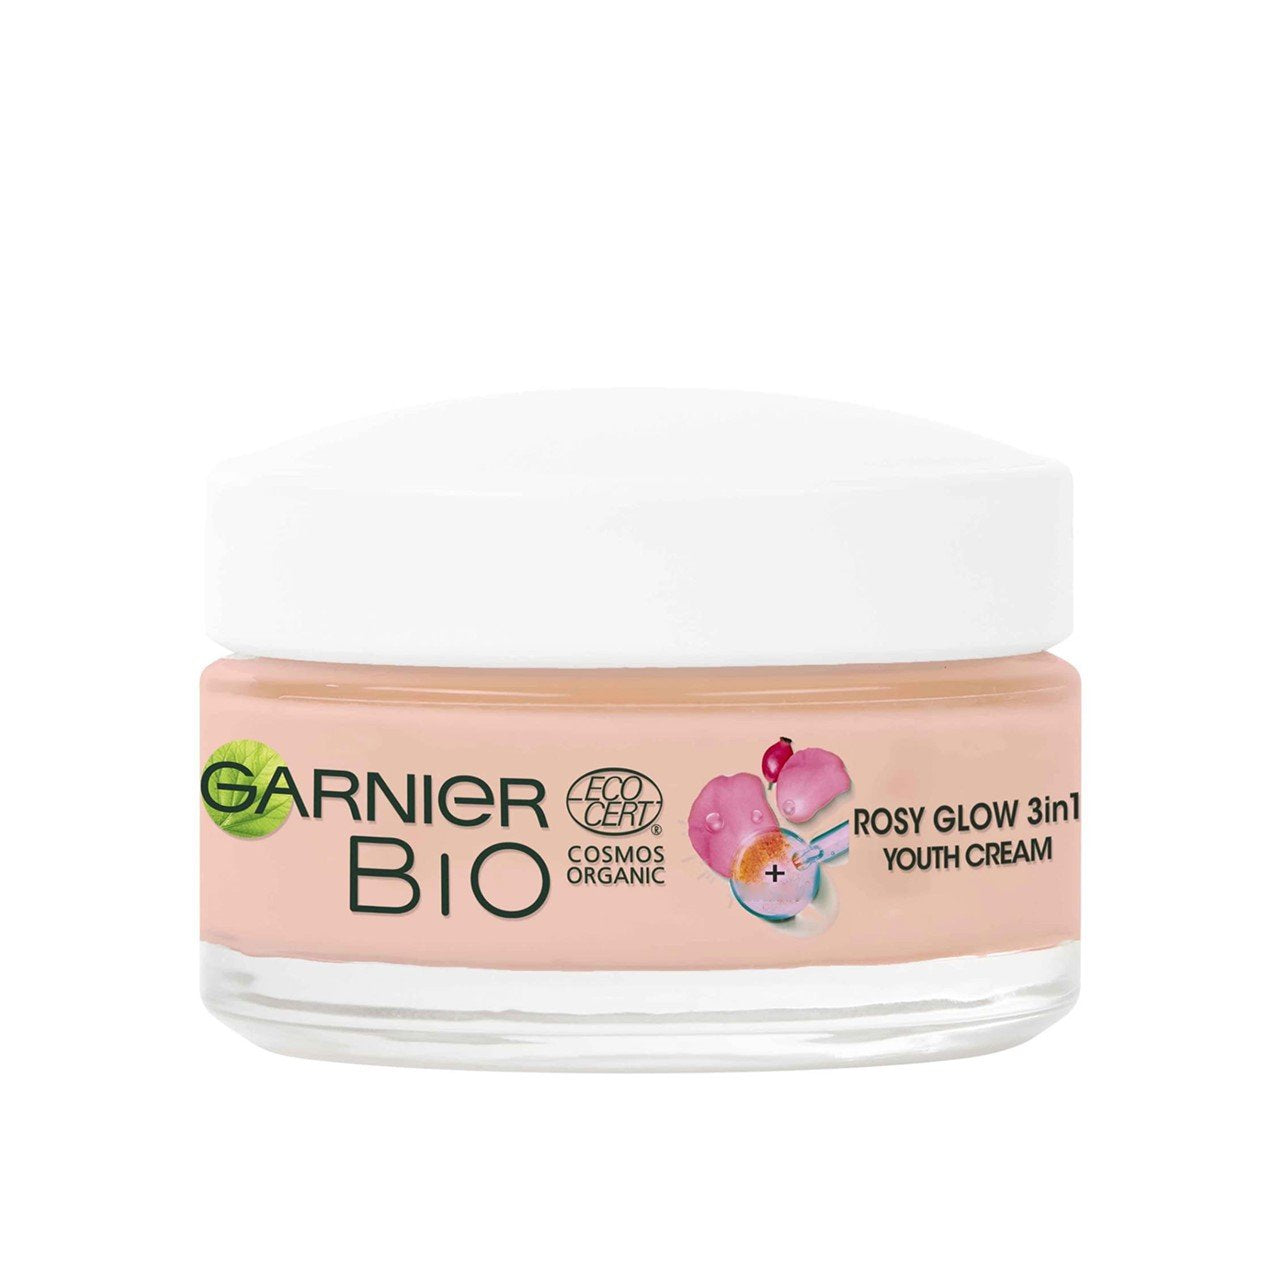 Garnier Bio Organic Rosy Glow 3in1 Youth Cream 50ml